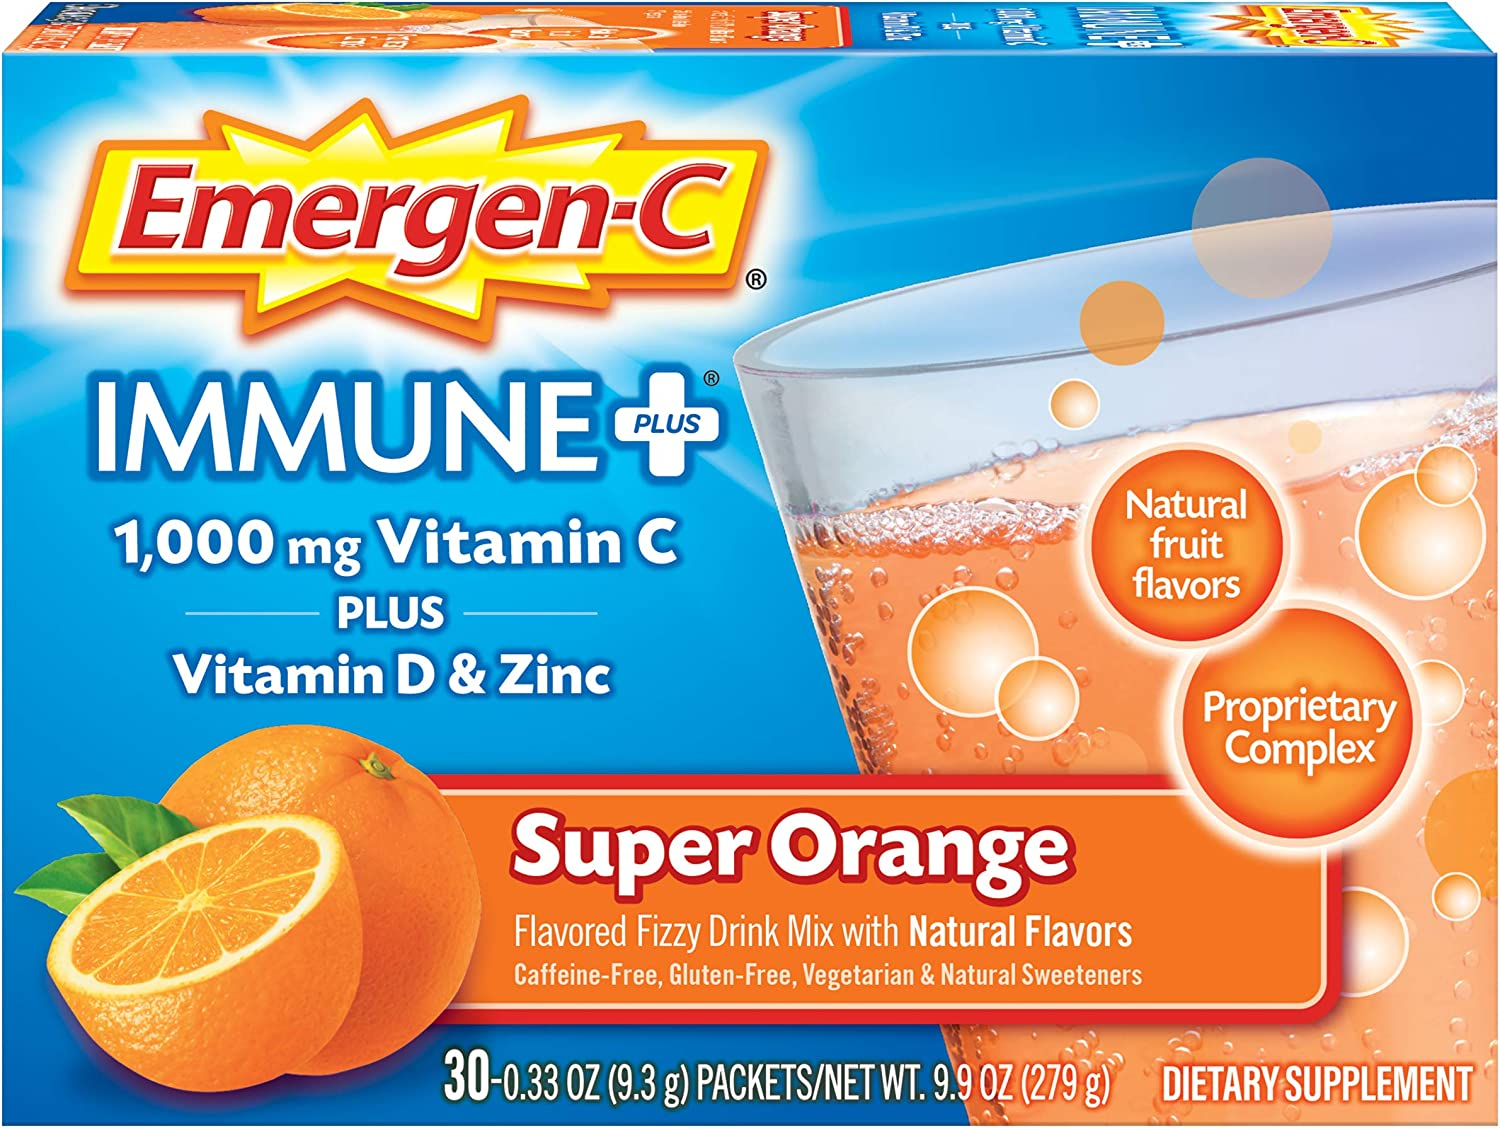 60-Ct Emergen-C Immune+ 1000mg Vitamin C Powder w/ Vitamin D, Zinc, Antioxidants and Electrolytes for Immunity, Immune Support Dietary Supplement (Super Orange Flavor) $17.98